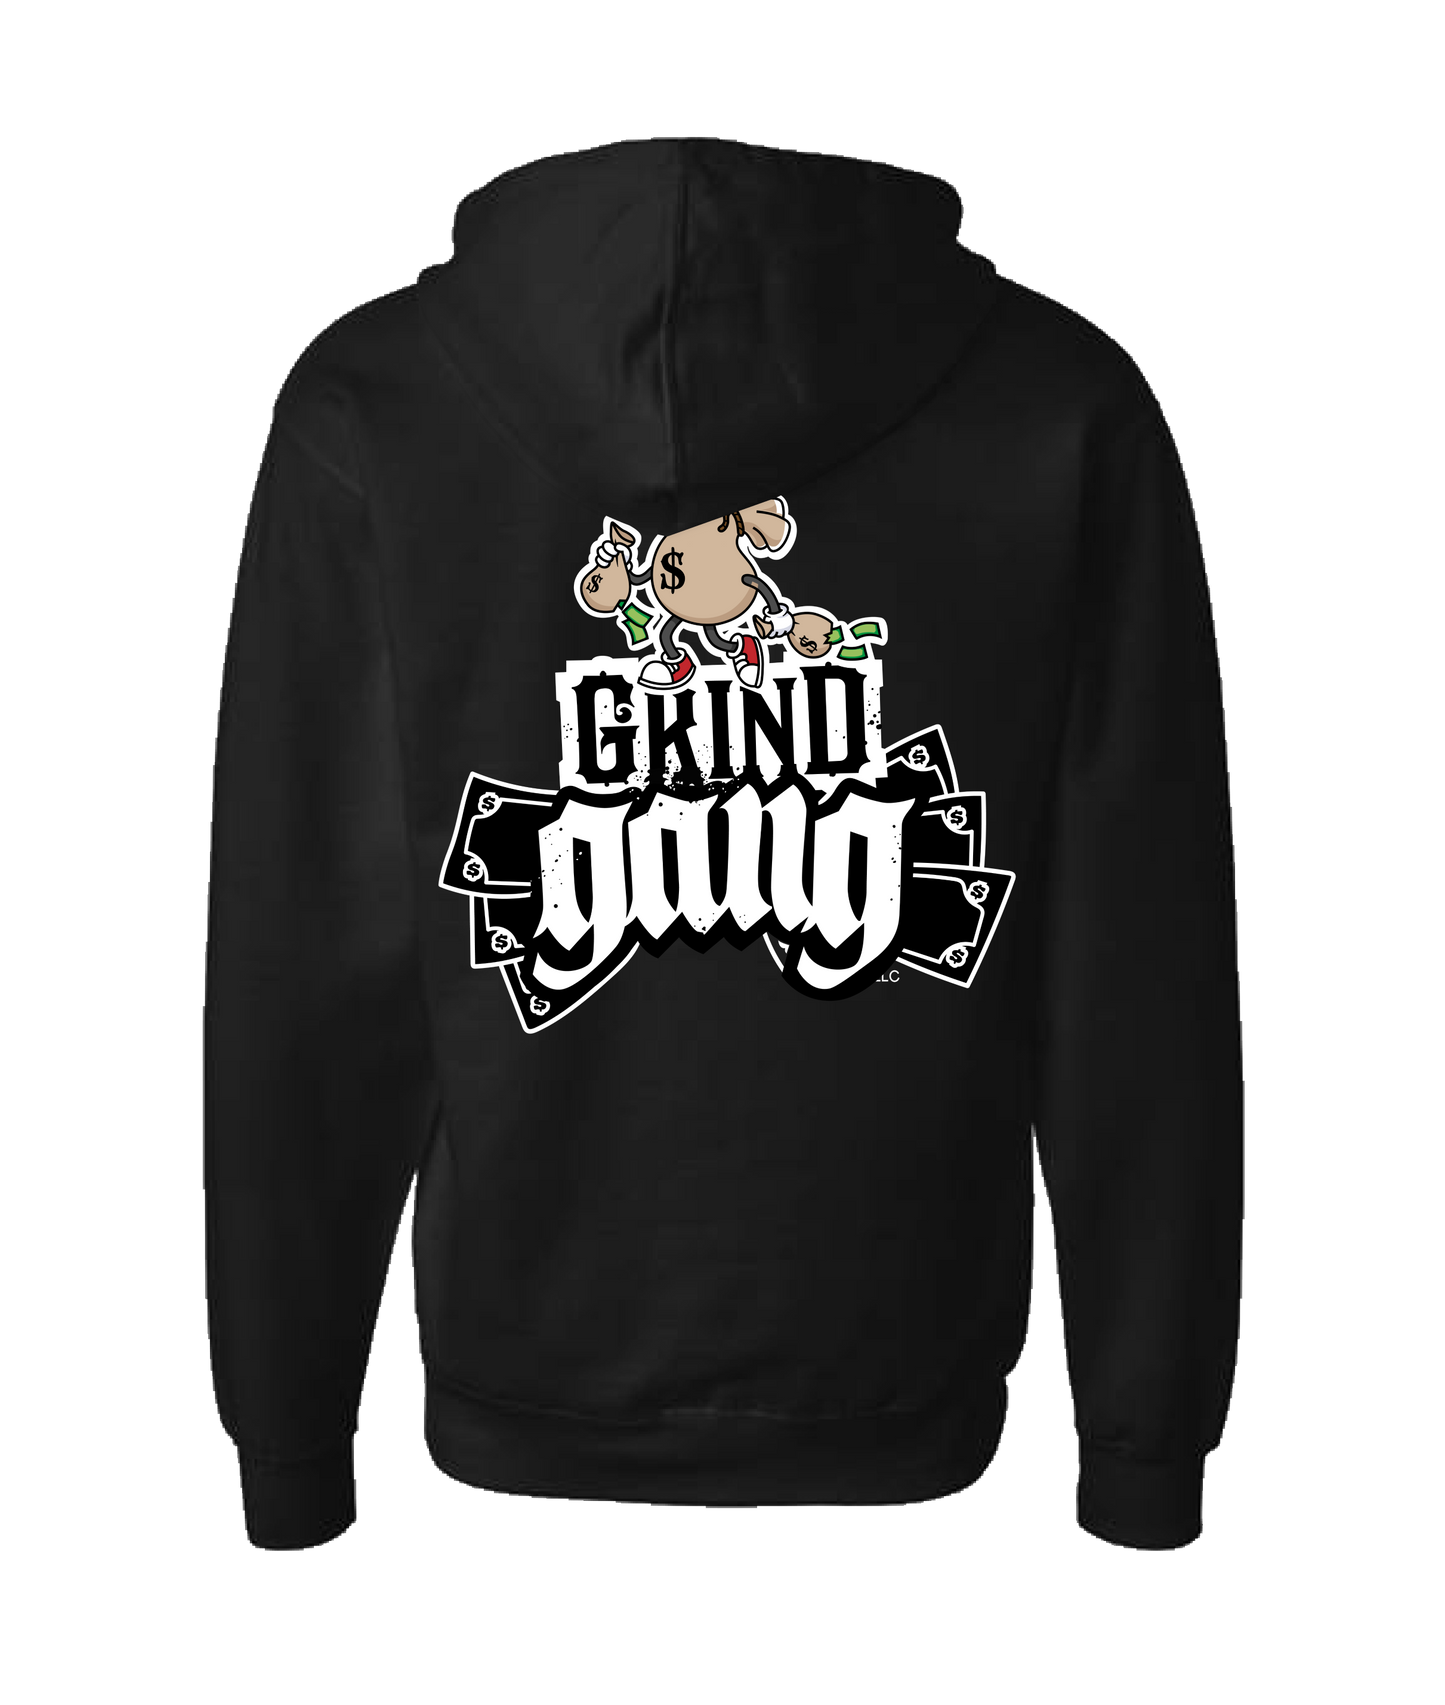 GRIND GANG ENT. LLC - MONEY BAG LOGO 2 - Black Zip Up Hoodie